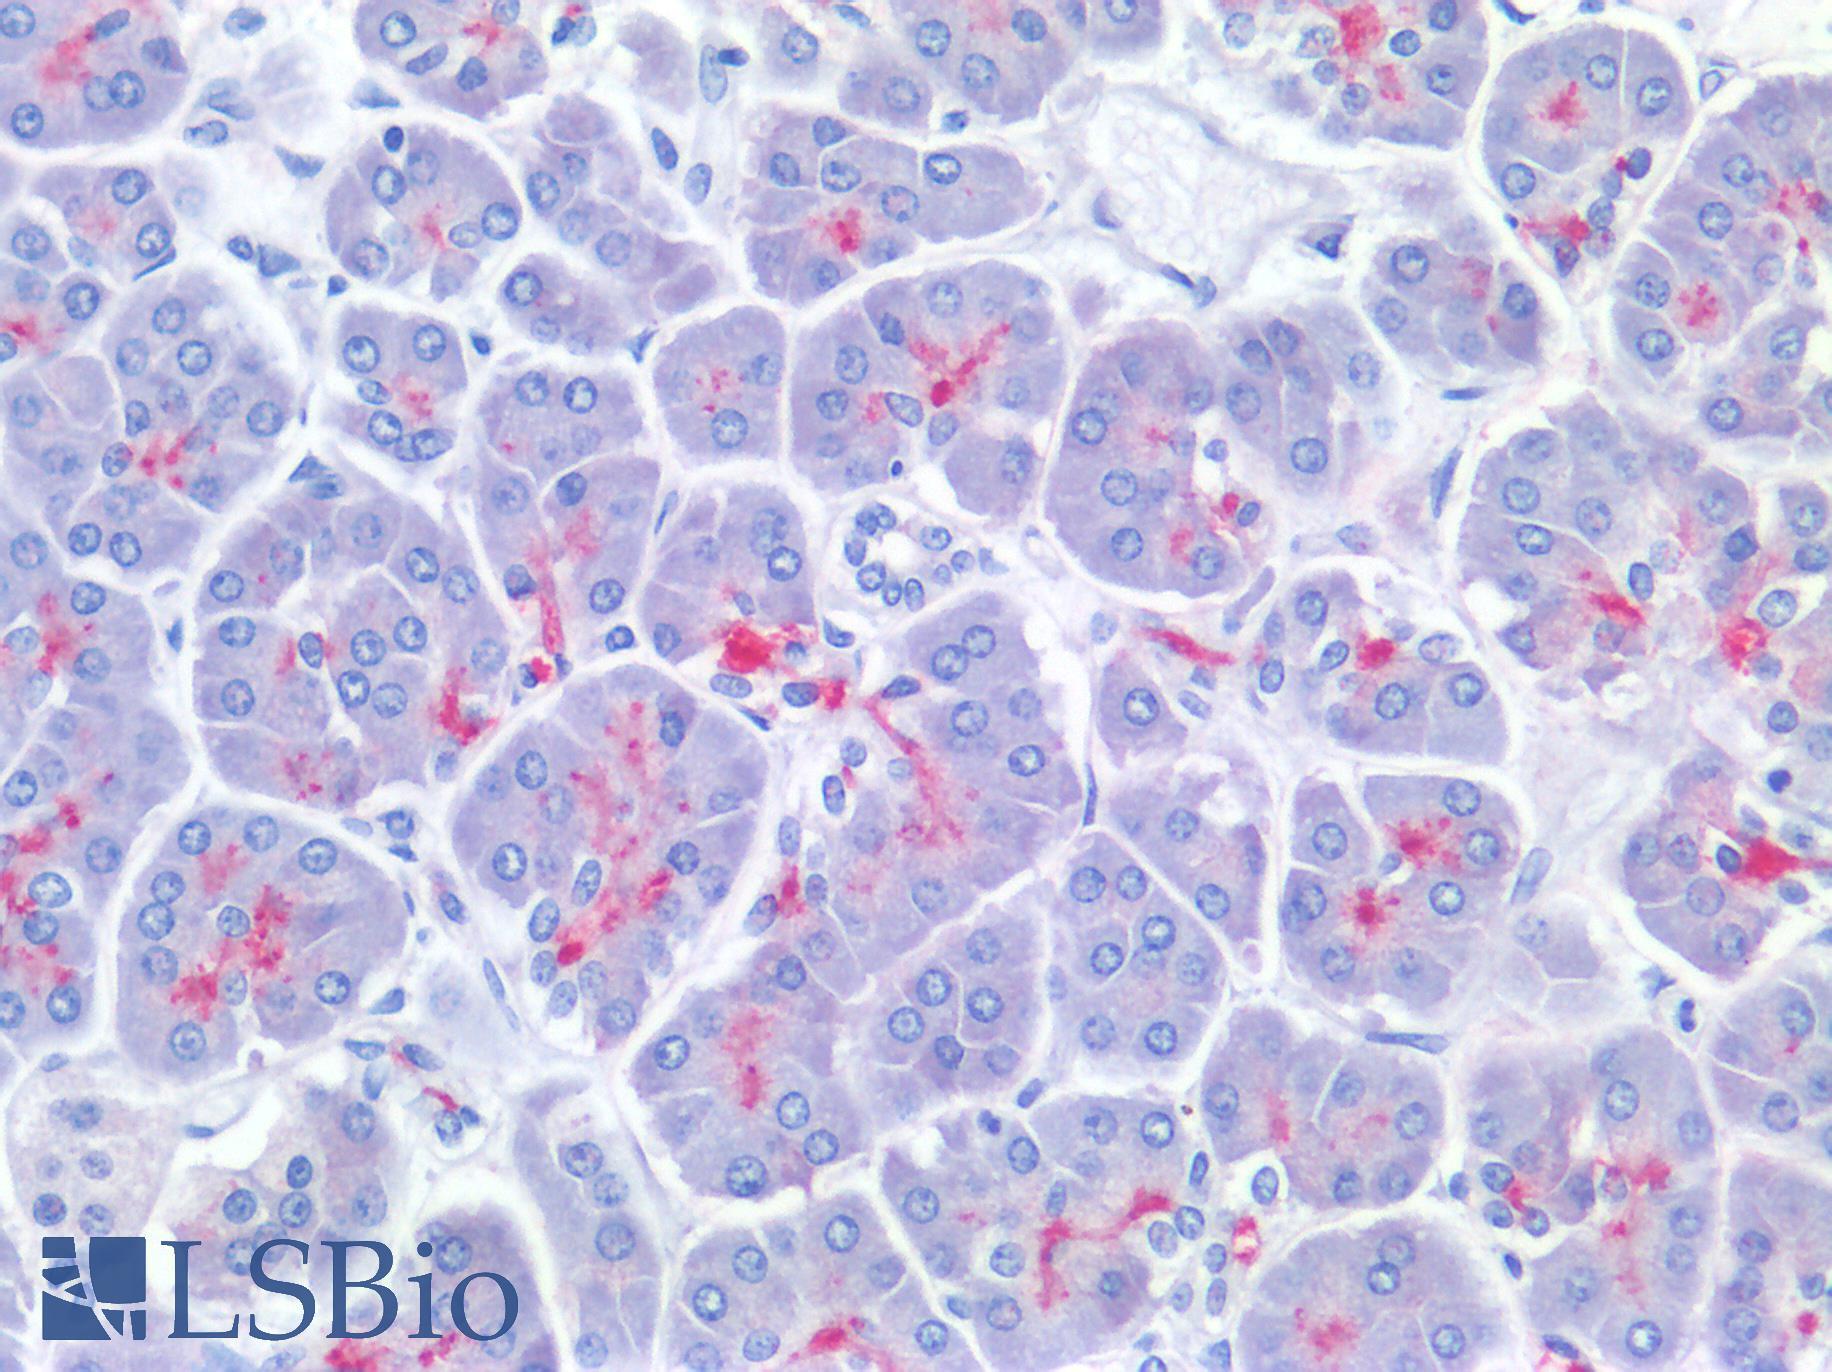 GP2 Antibody - Human Pancreas: Formalin-Fixed, Paraffin-Embedded (FFPE)